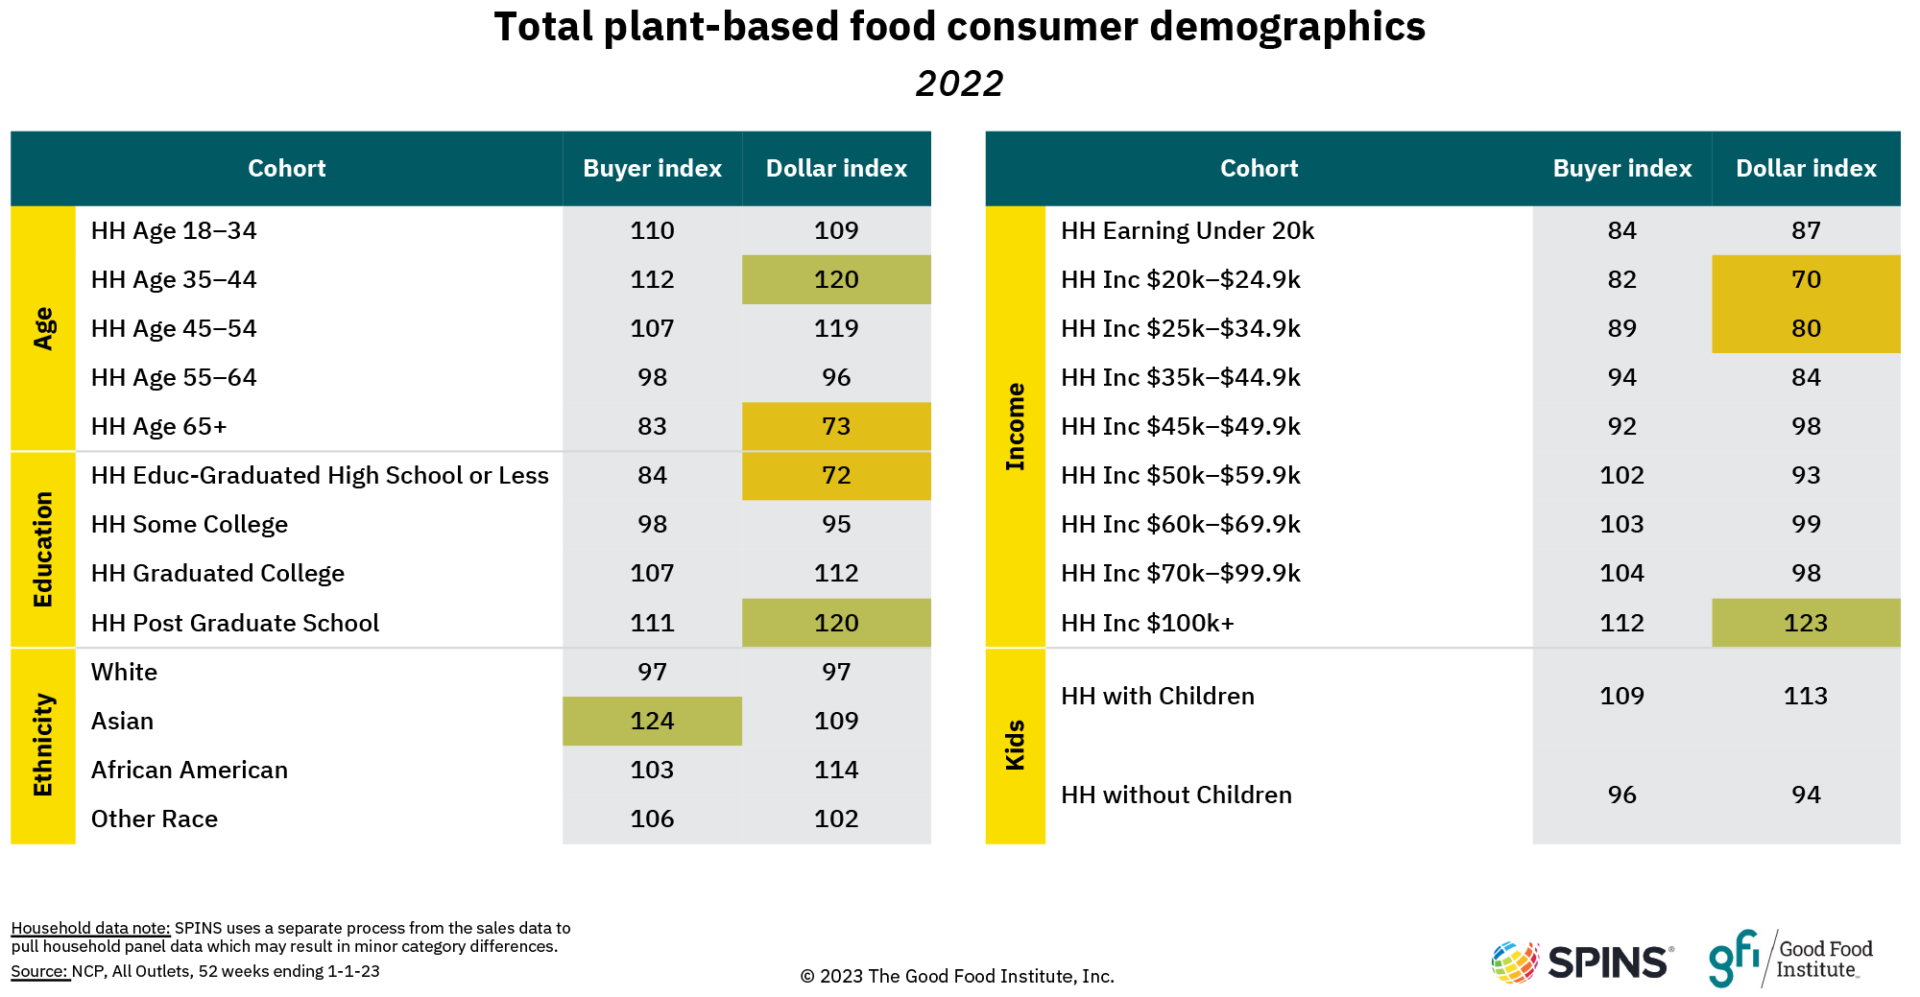 Overall plant-based food consumer demographics, 2022